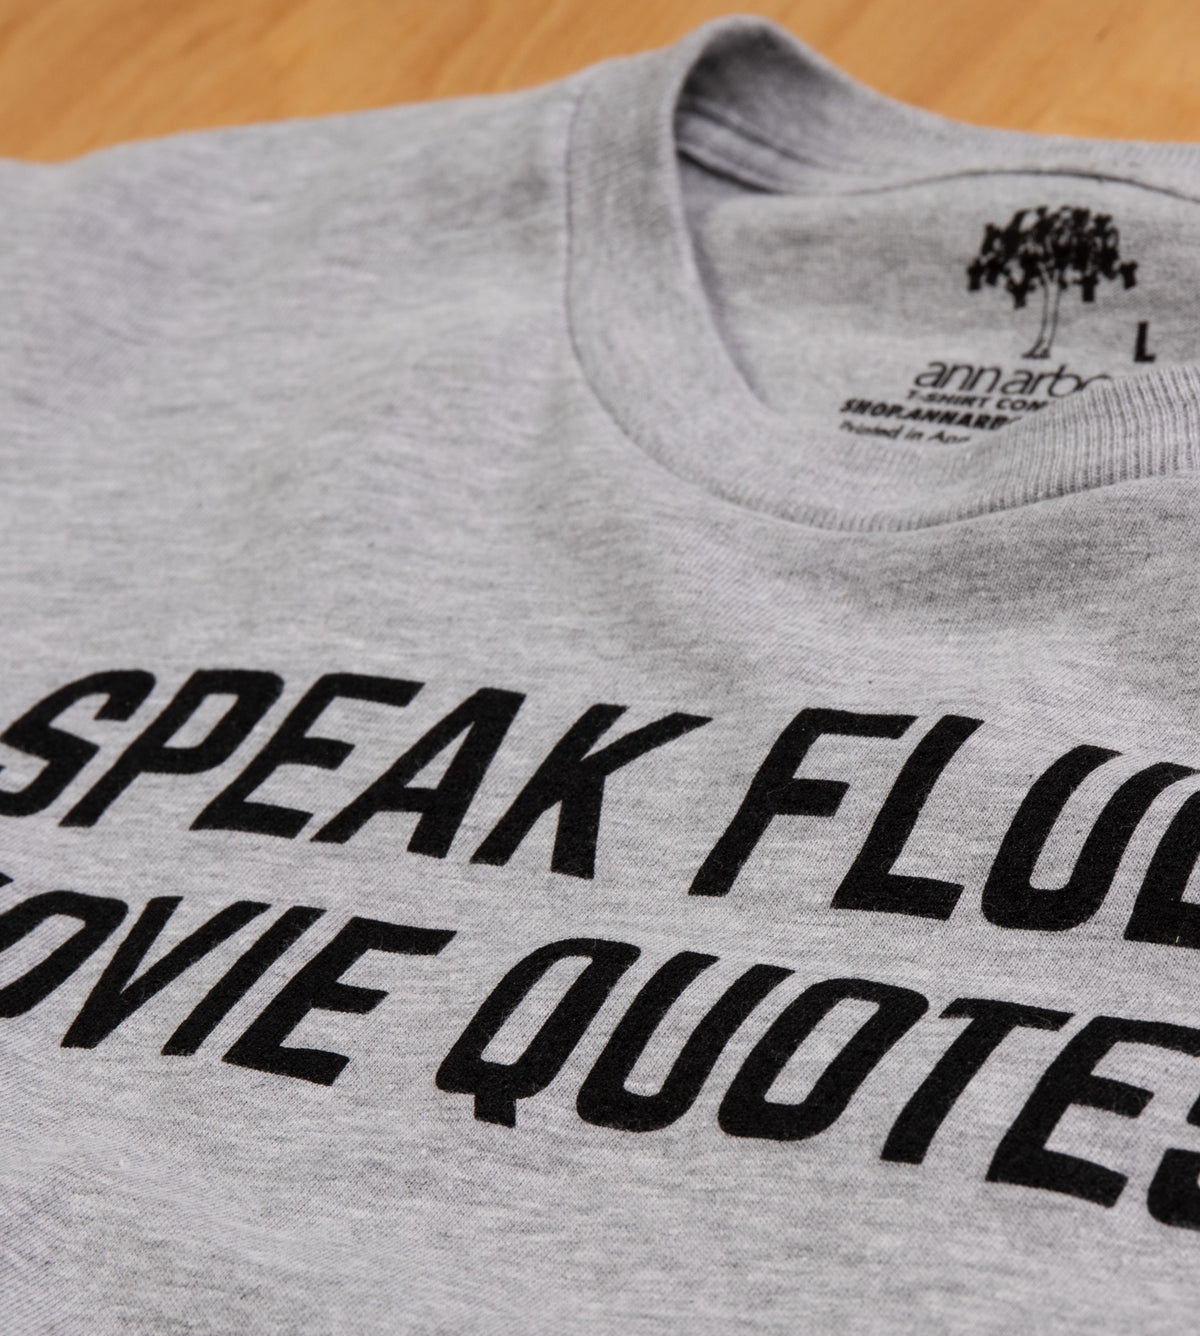 I Speak Fluent Movie Quotes - Funny Film Fan Sarcasm Humor Men Joke T-shirt